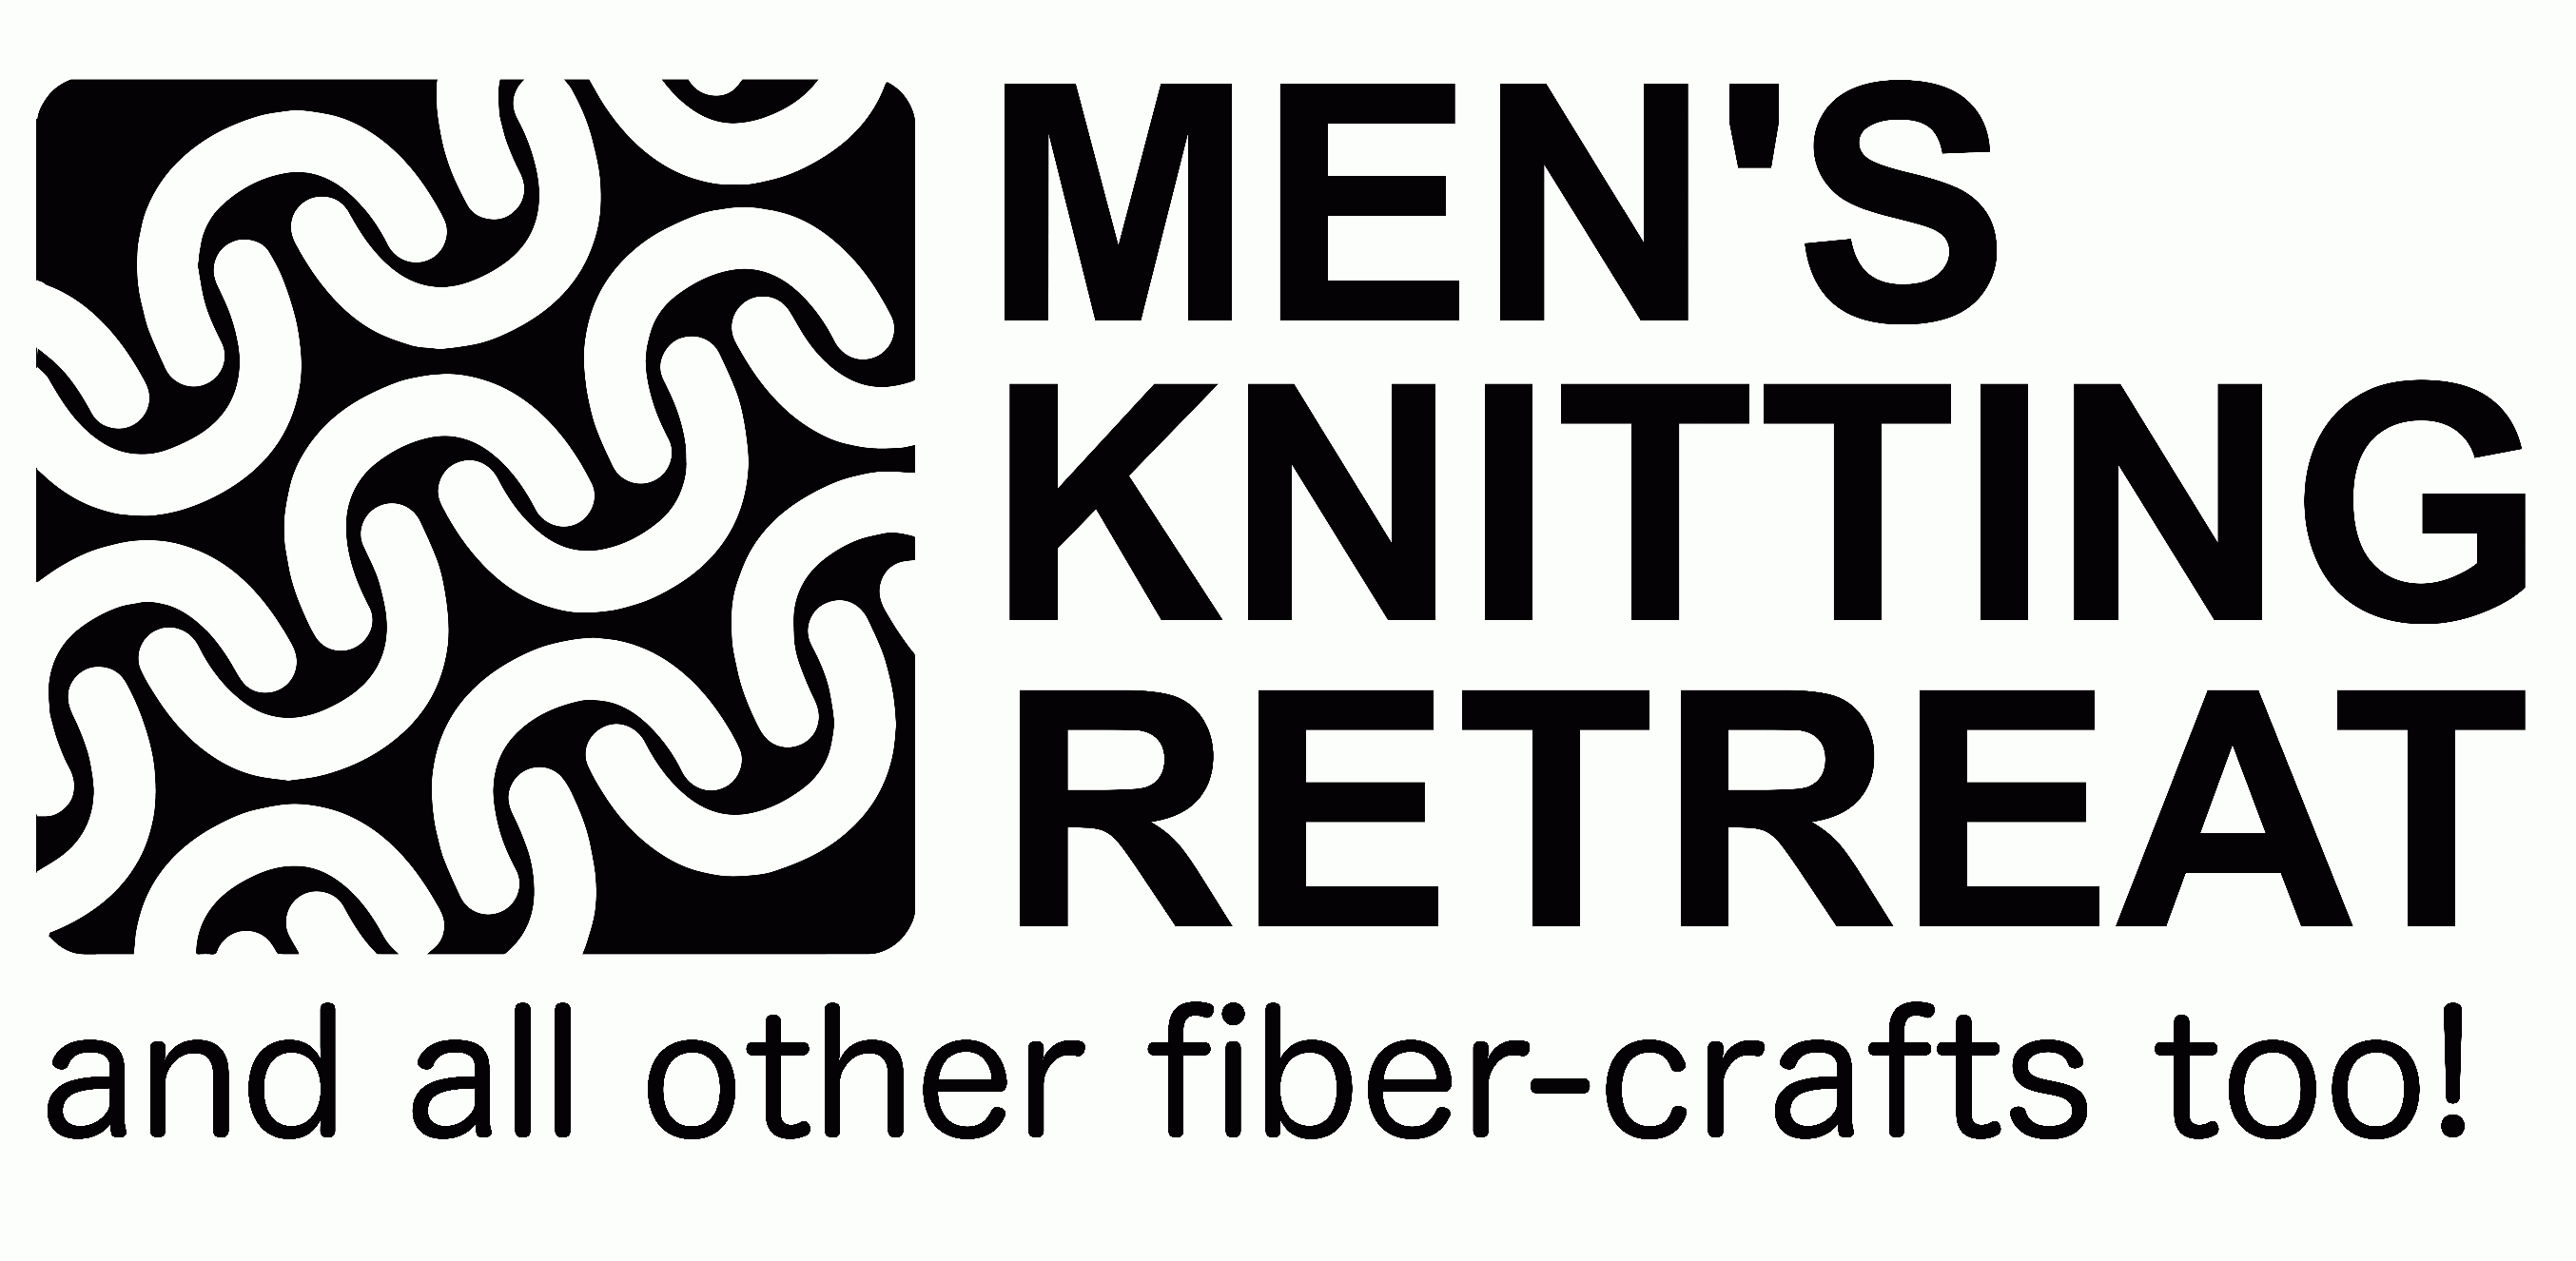 Willie Warmer Knitting Pattern Free Free Pattern Downloads Mens Knitting Retreats